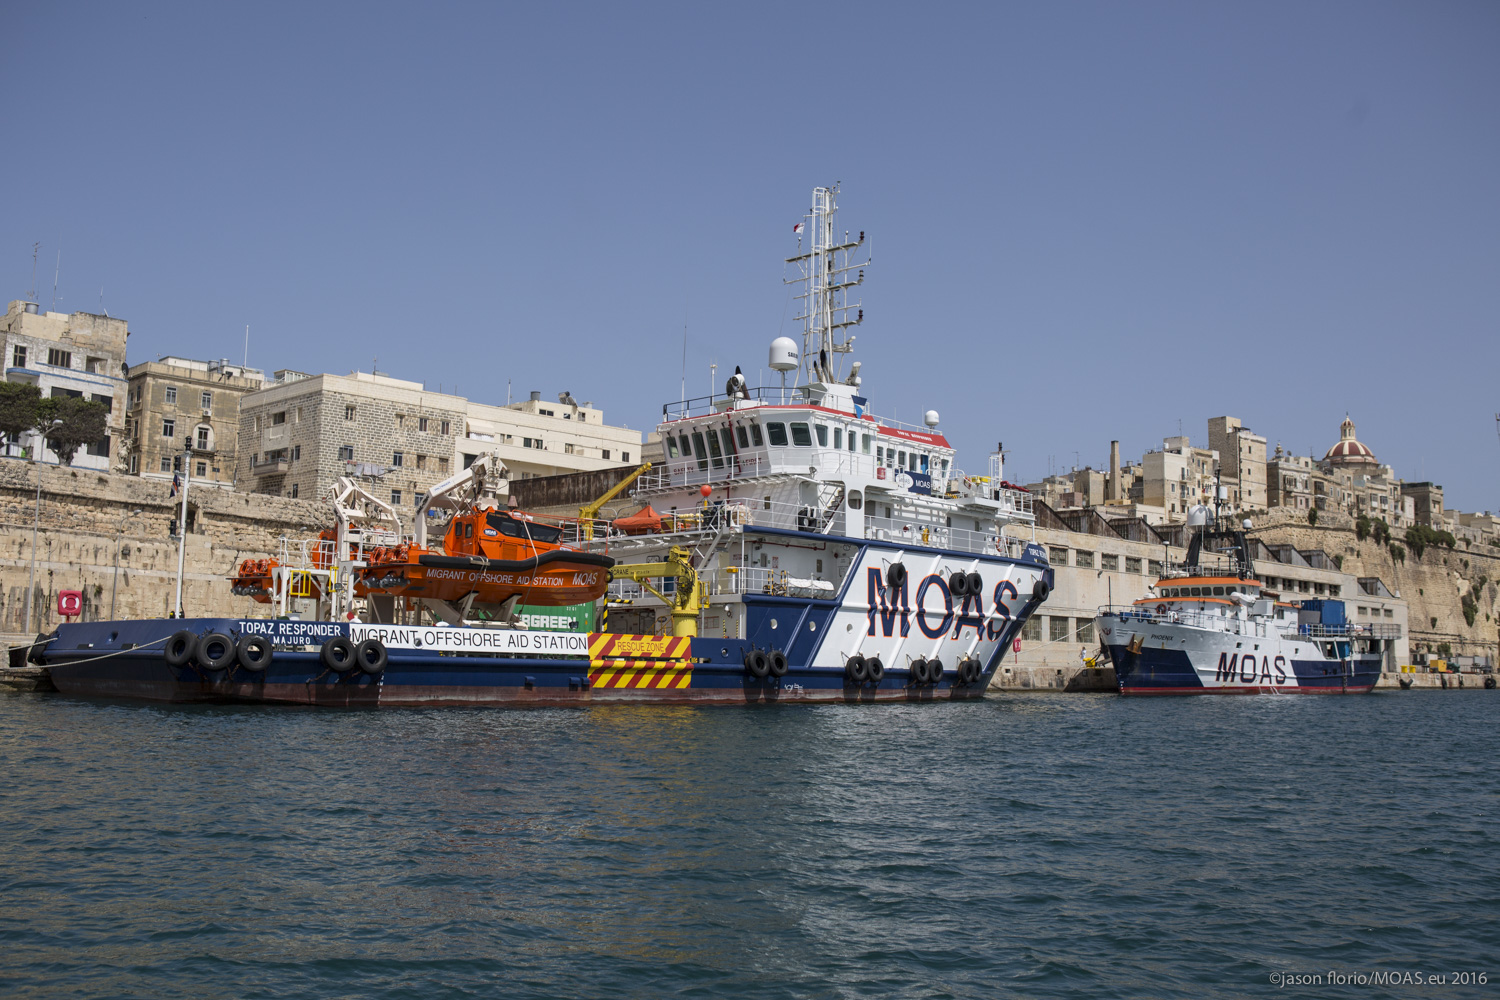 MOAS Boats Responder & Phoenix in Malta - Photo: Jason =Florio/MOAS